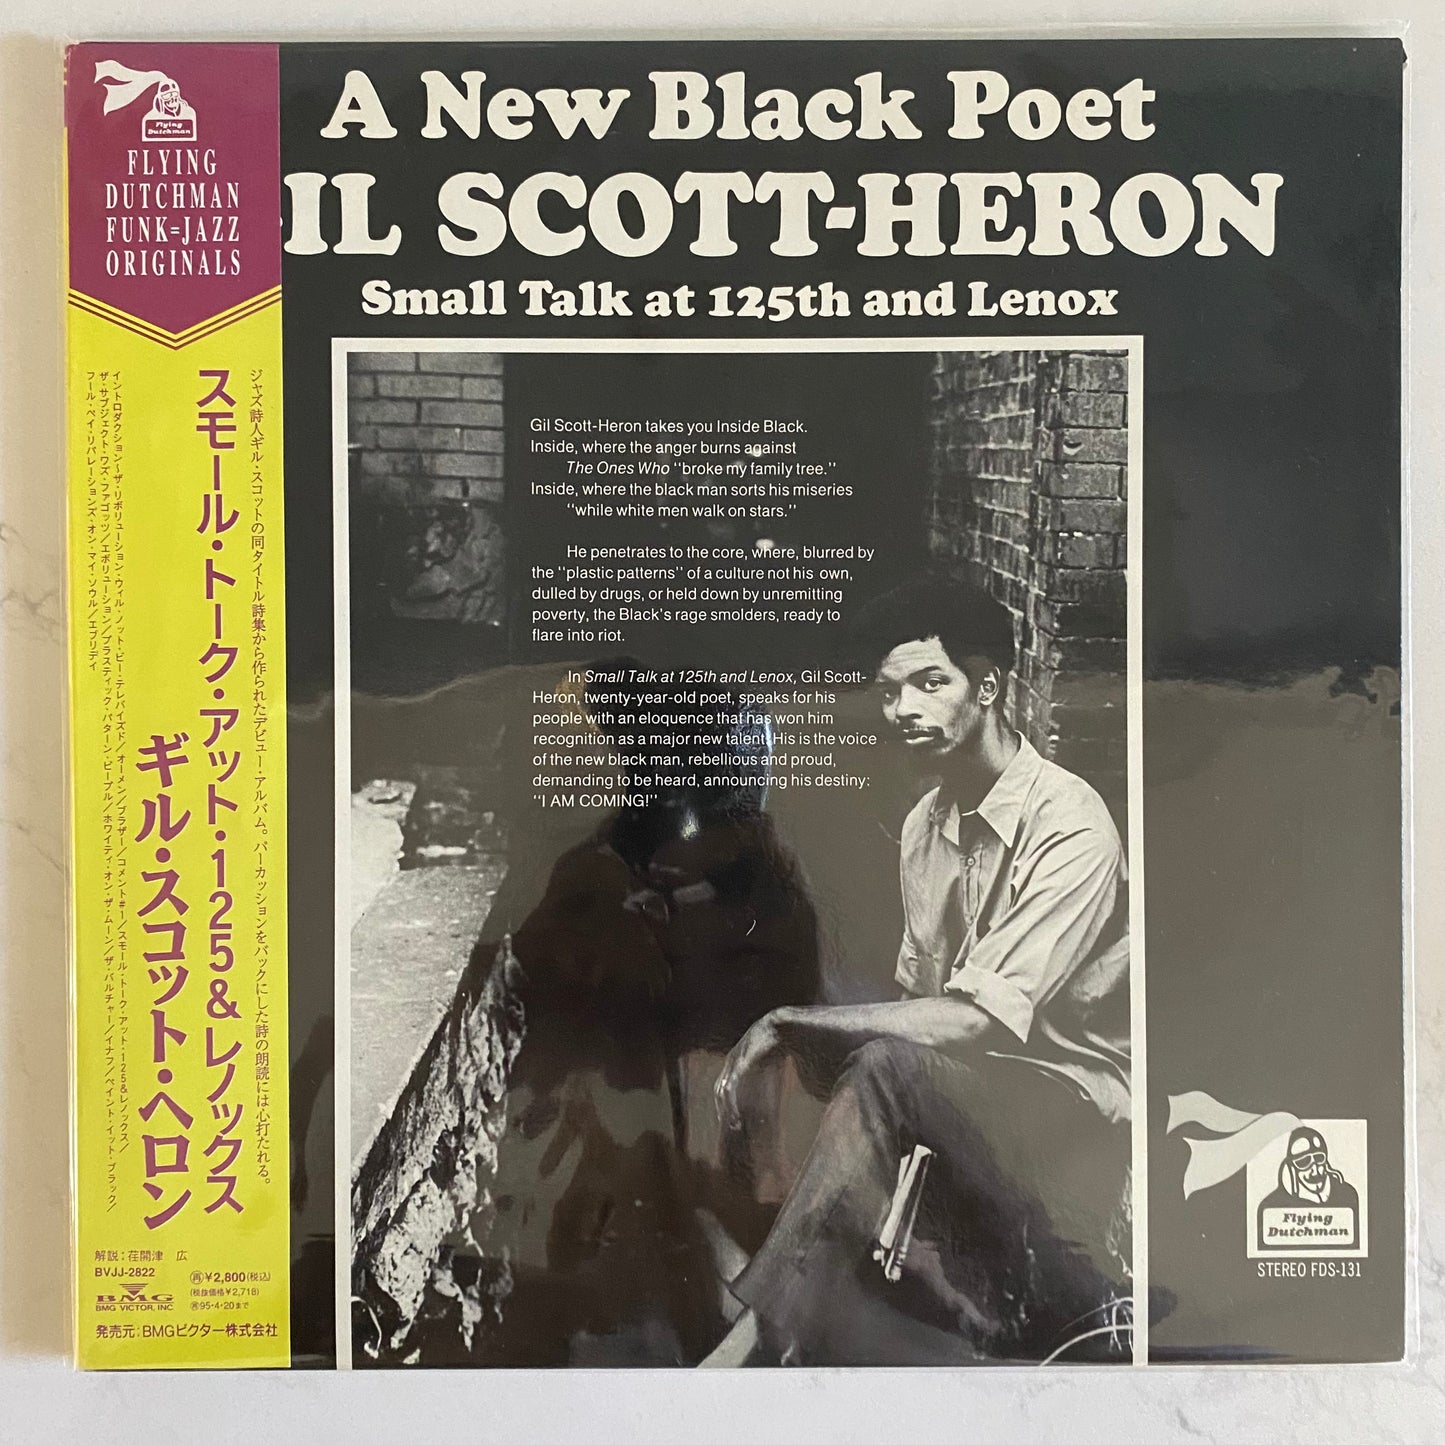 Gil Scott-Heron - Small Talk At 125th And Lenox (LP, Album, RE, Gat). FUNK